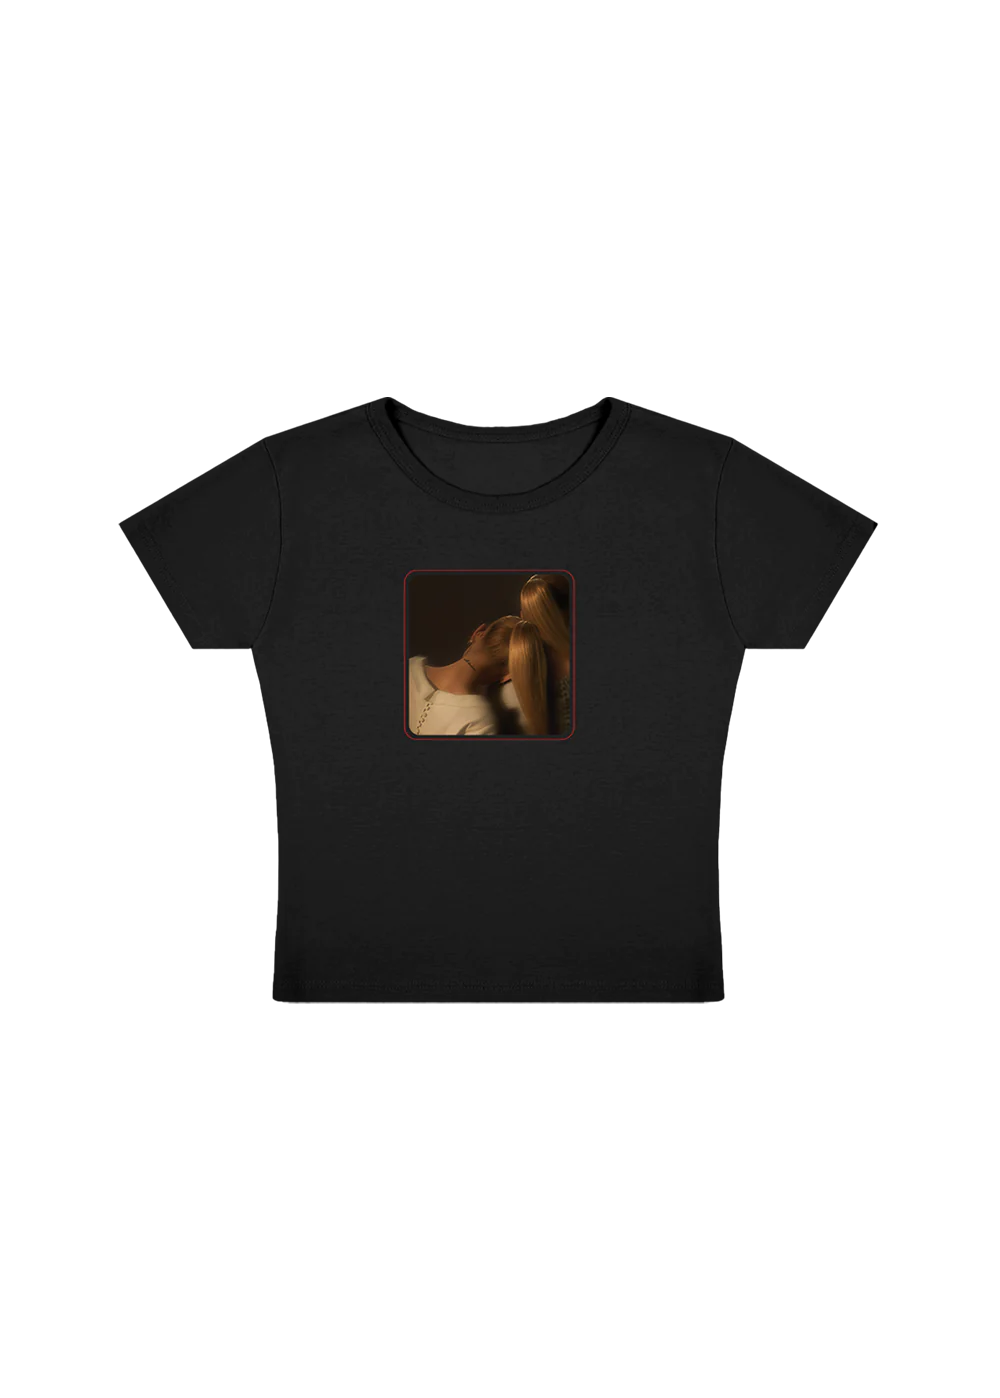 Ariana Grande - ag7 cropped black t-shirt